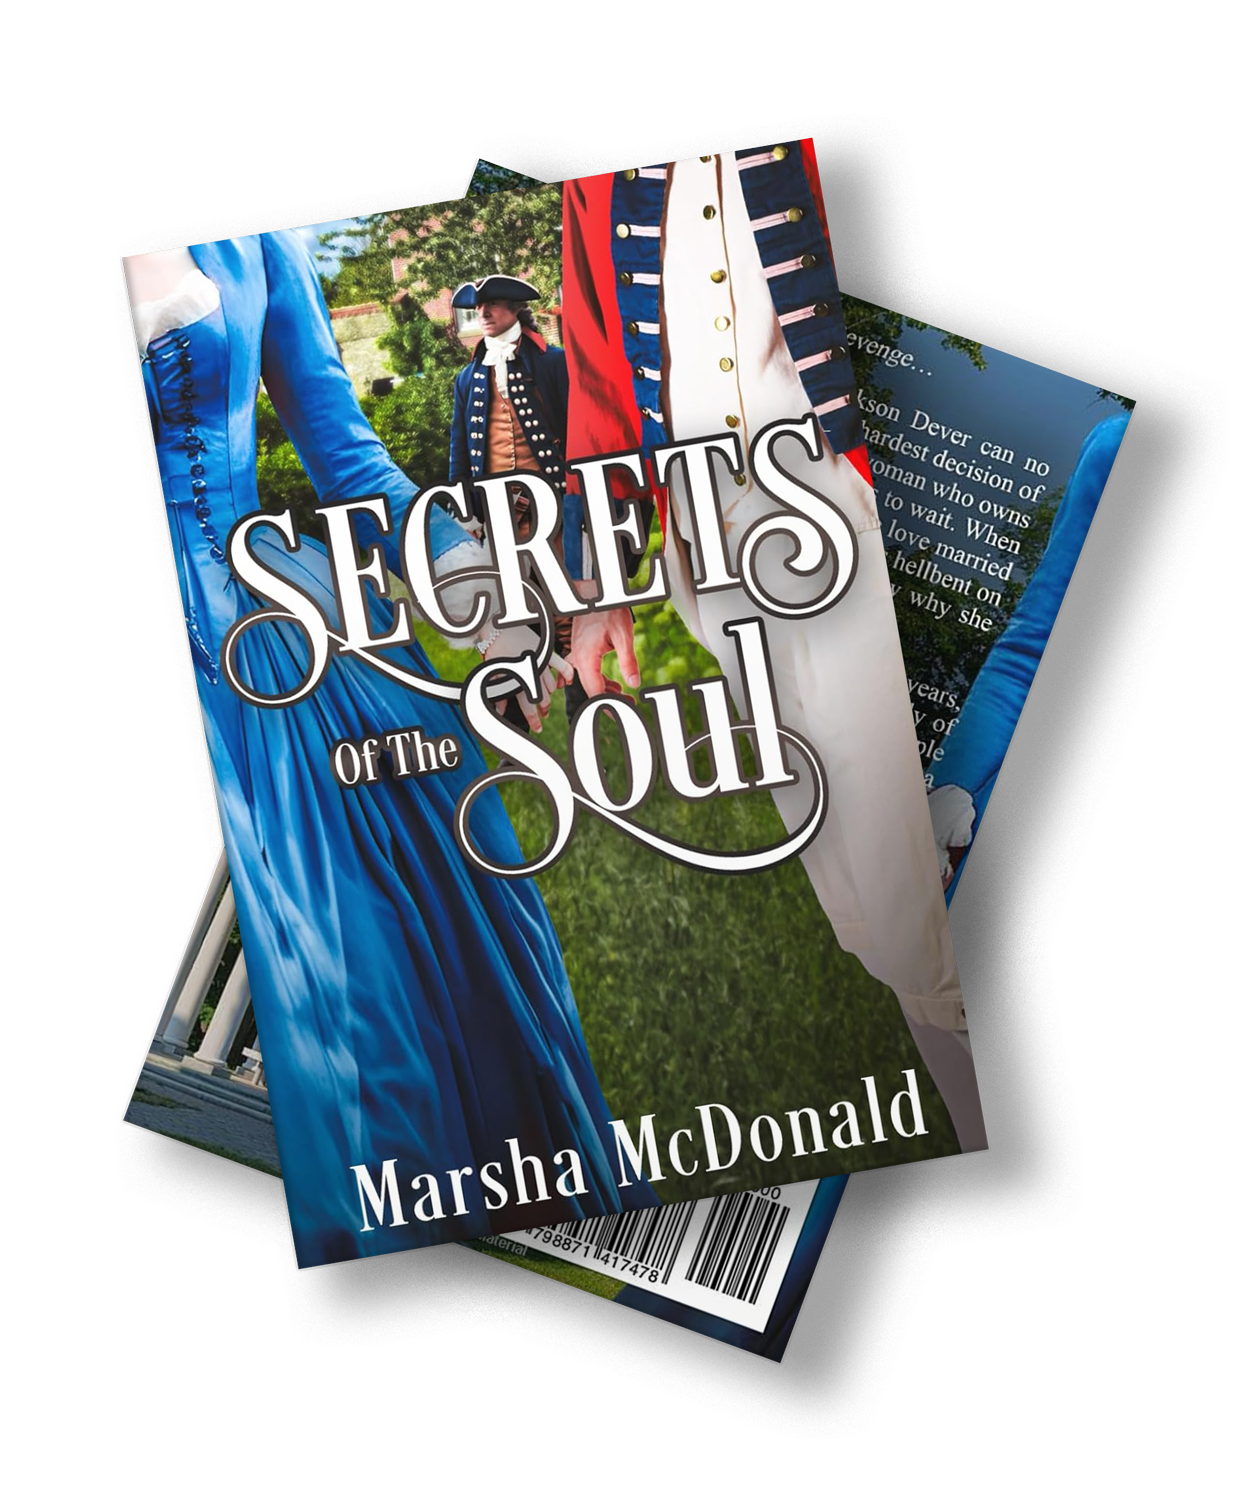 Secrets of the Souls - Redcoat Romantic Novel by Marsha McDonald